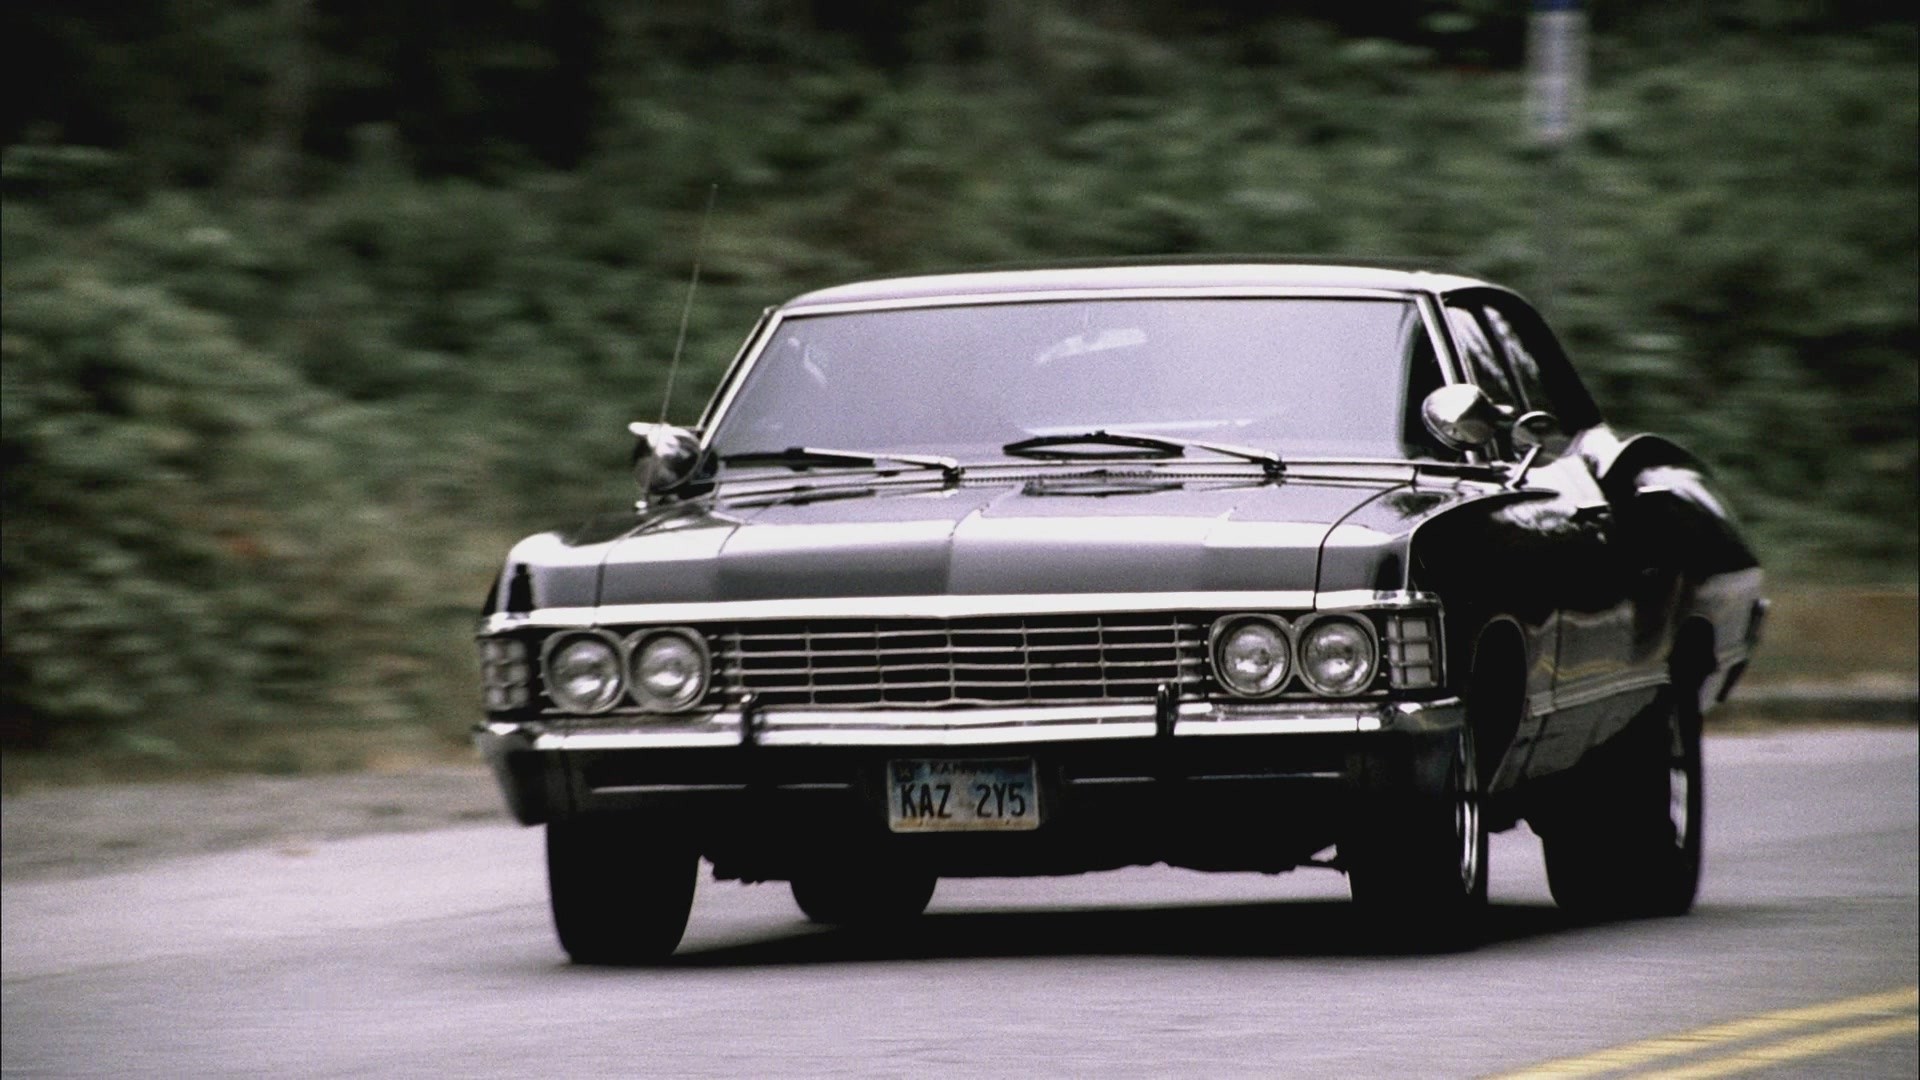 1920x1080 Memorable Moments: Supernatural's Impala - aka Metallicar - aka "Baby"